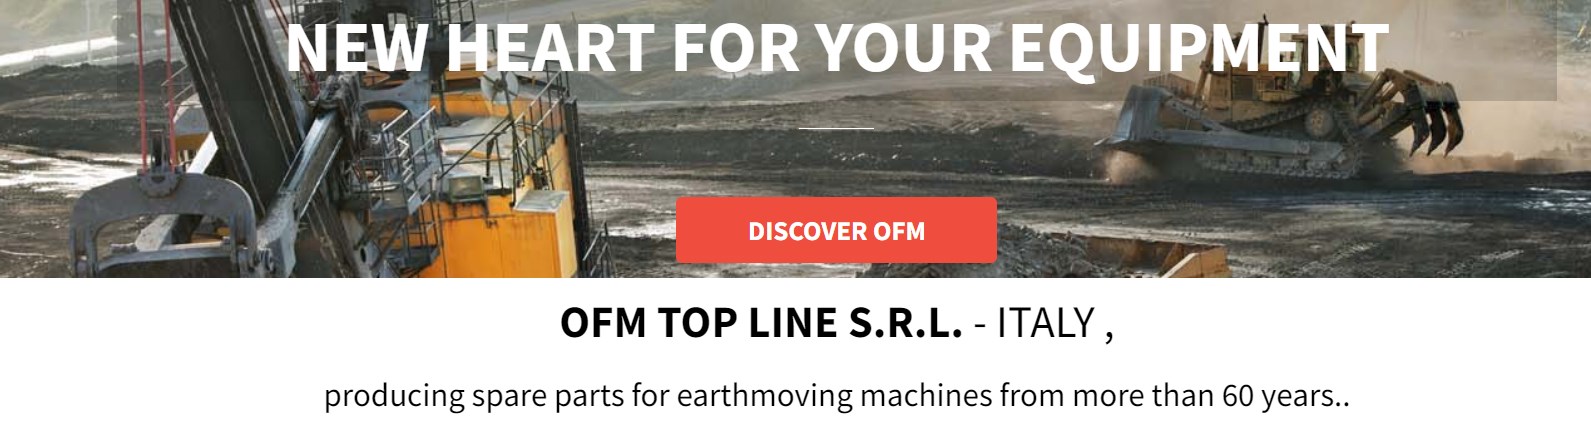 OFM TOP LINE S.R.L. excavator electrical parts machine manufacturer